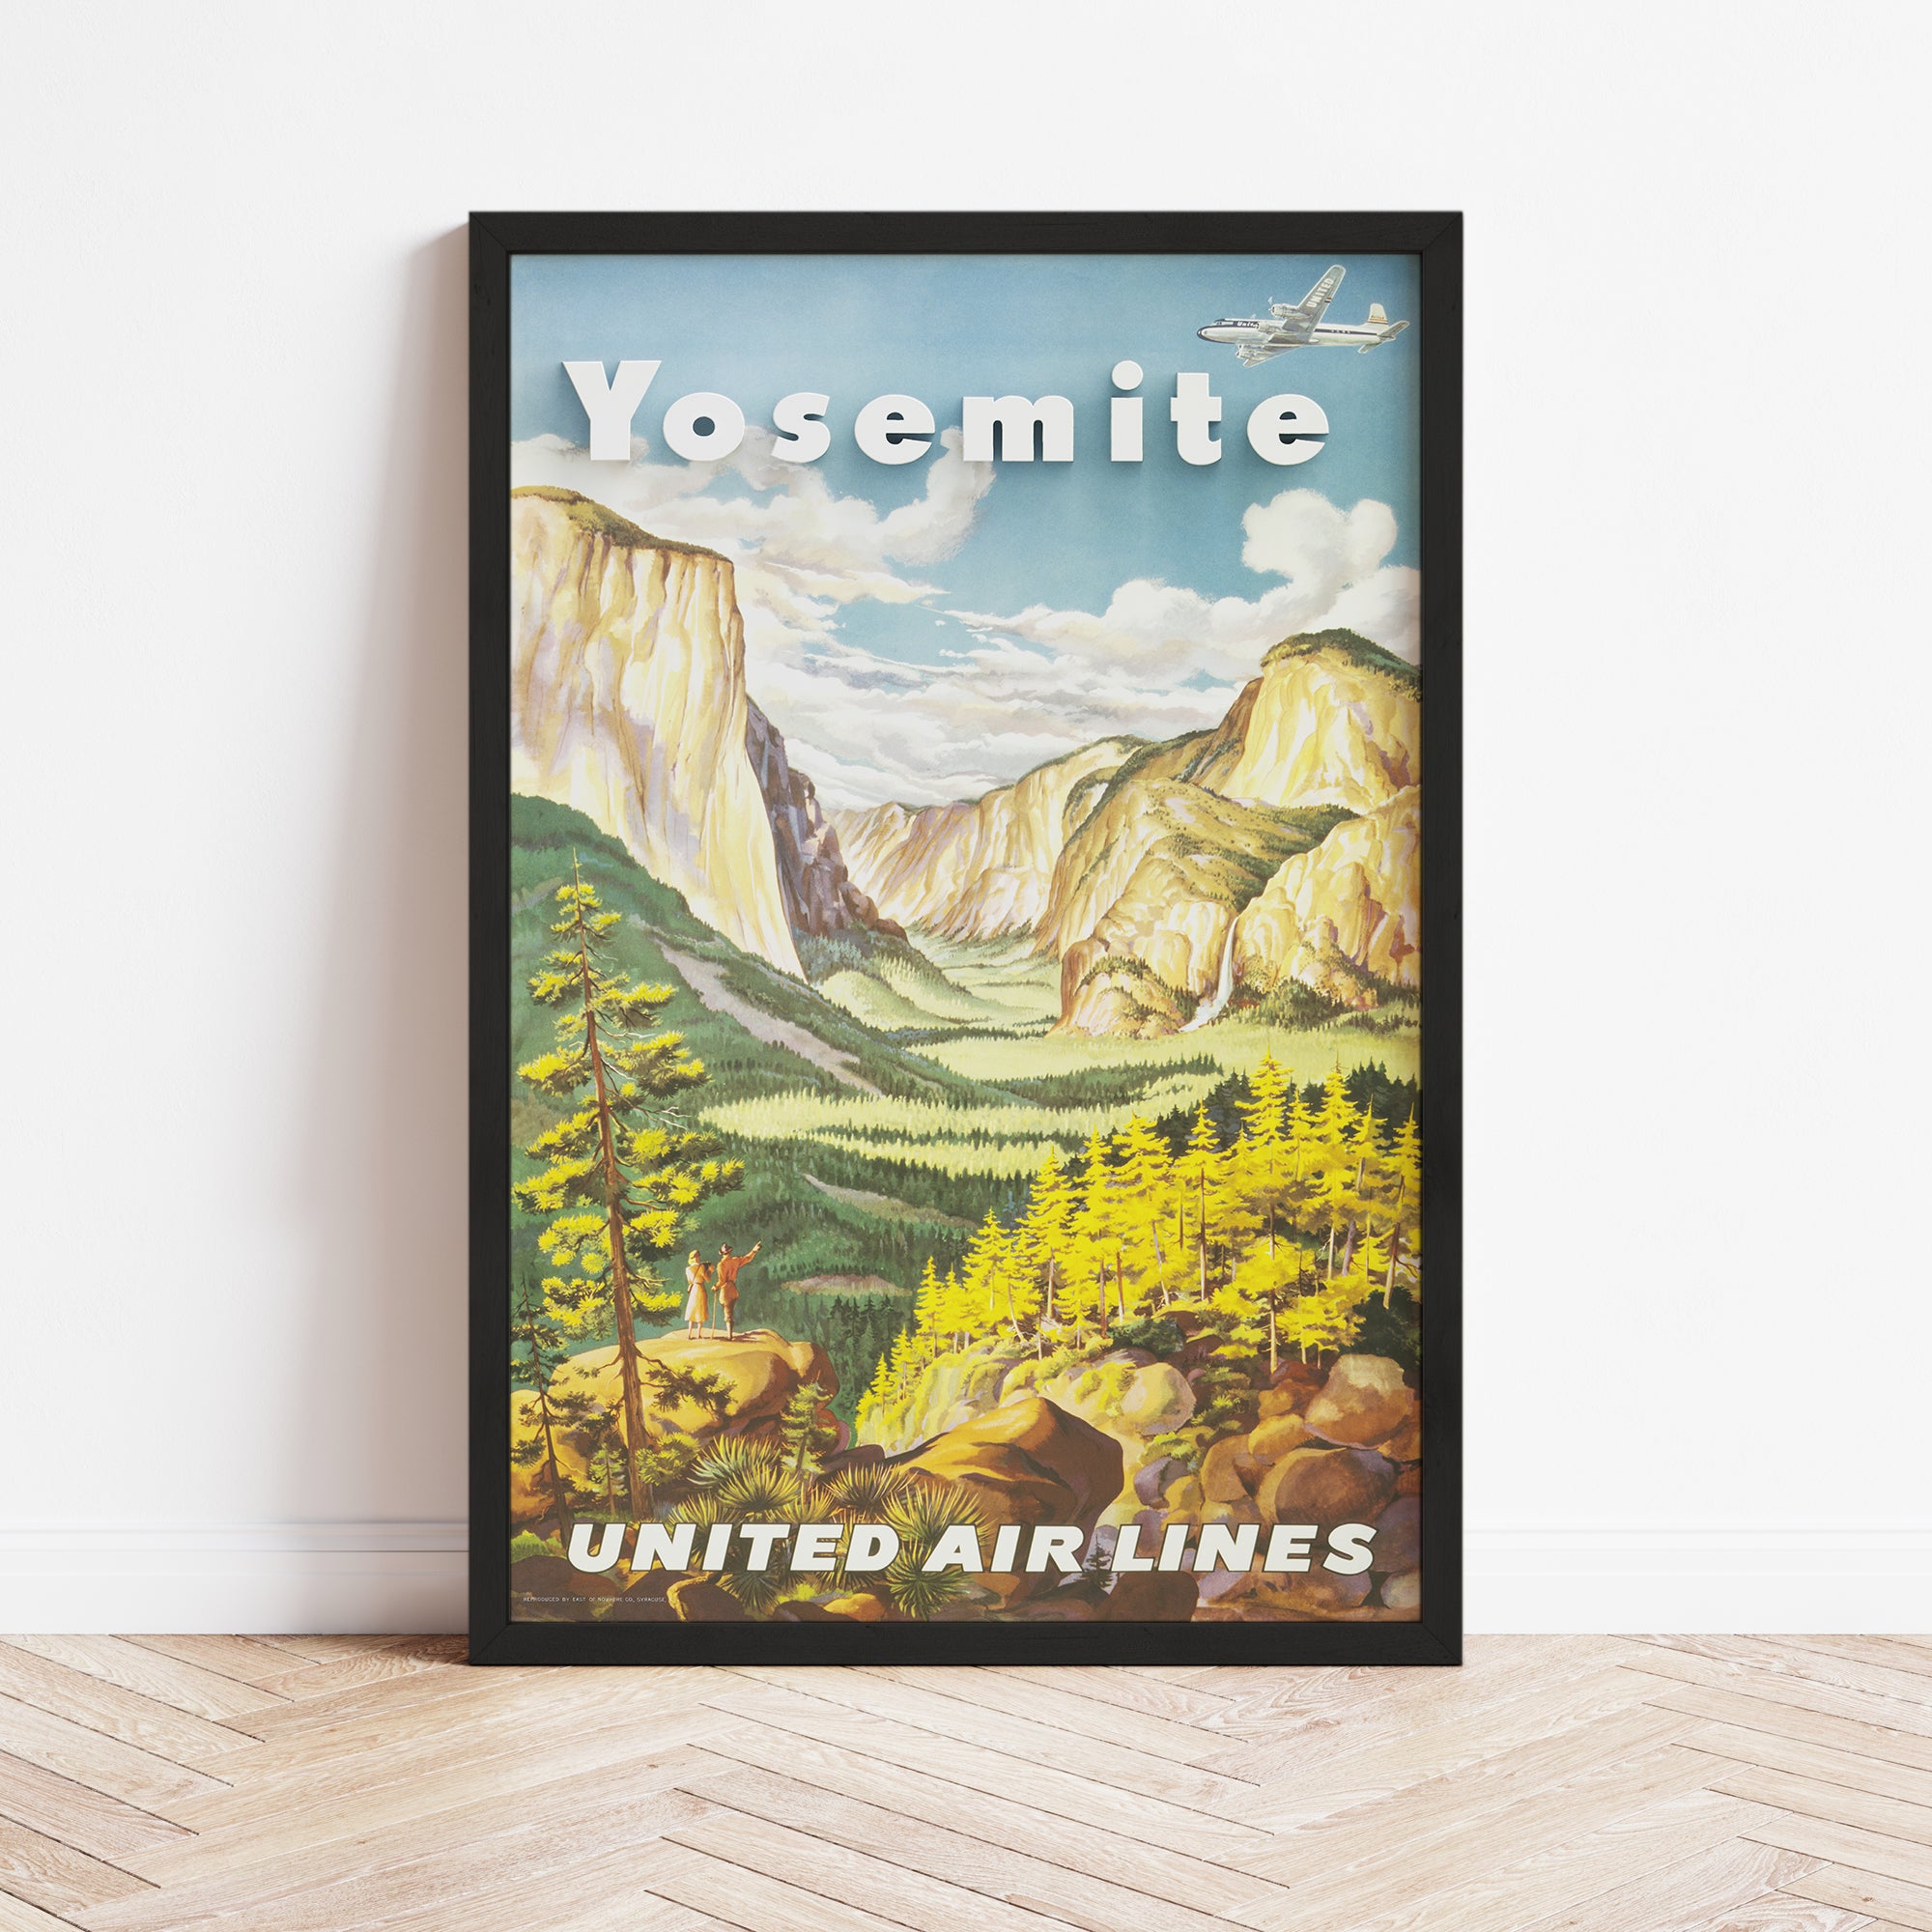 United Airlines Yosemite (1945) - Retro Art Print